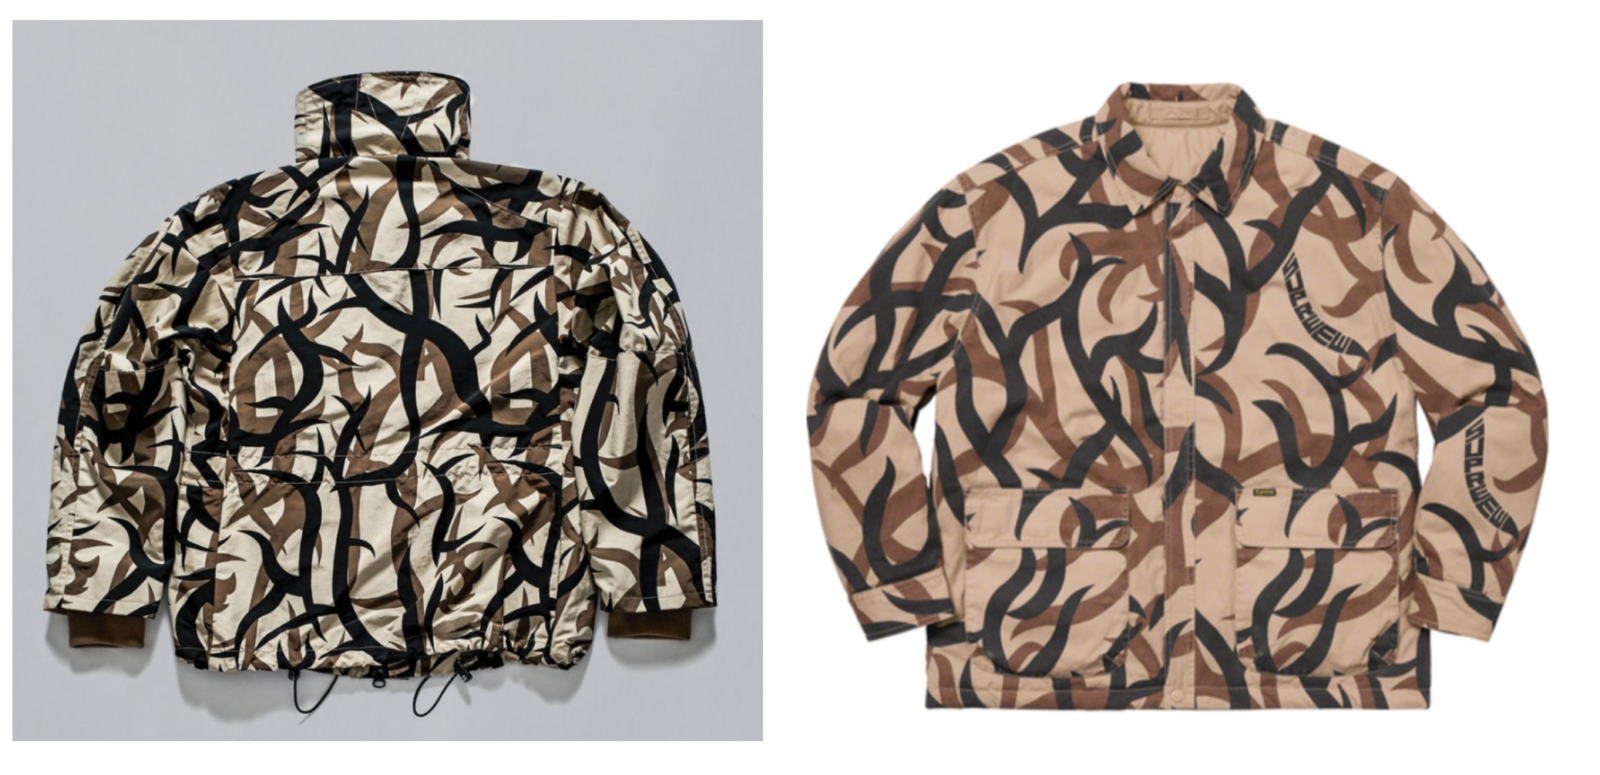  ASAT camo jacket (left) & Supreme camo jacket (right) 